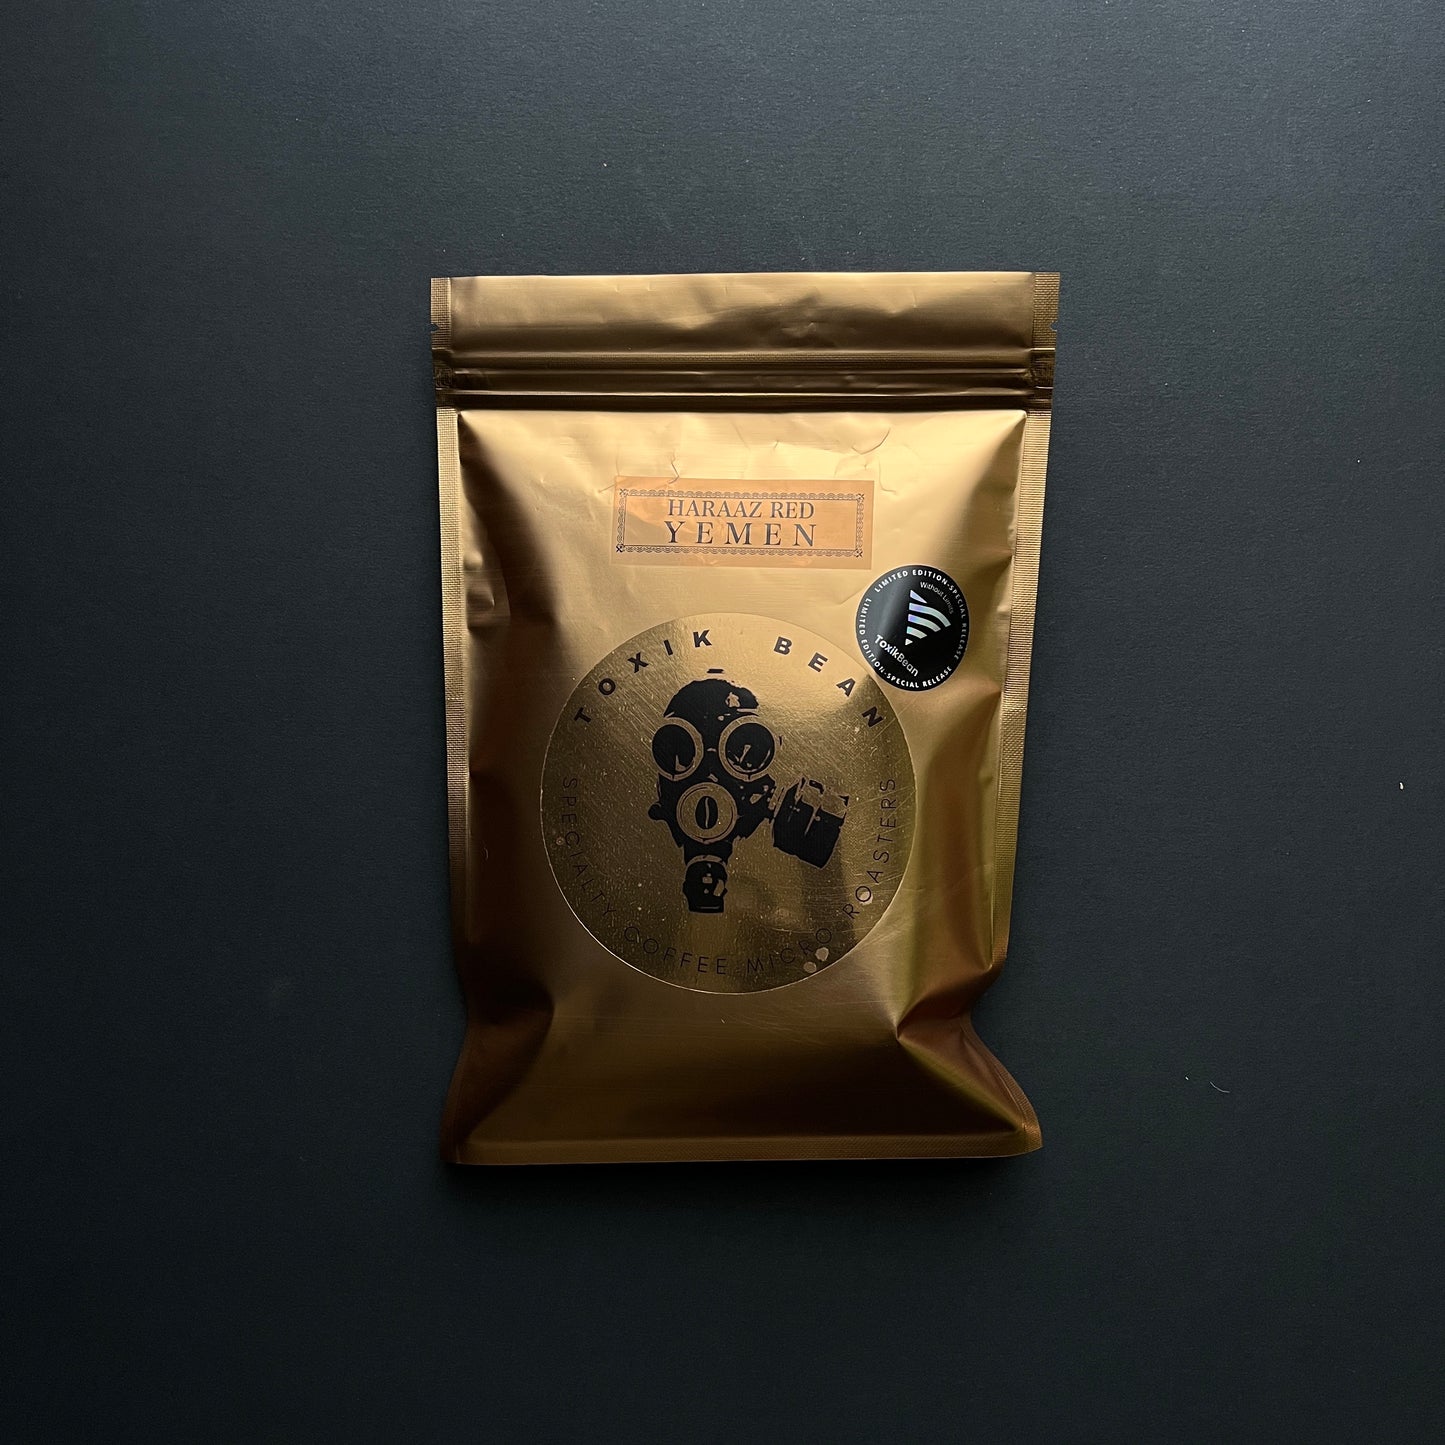 Haraaz Red Natural Yemen Special coffee Gold Bag label Toxik Bean Basic Barista Australia Melbourne 